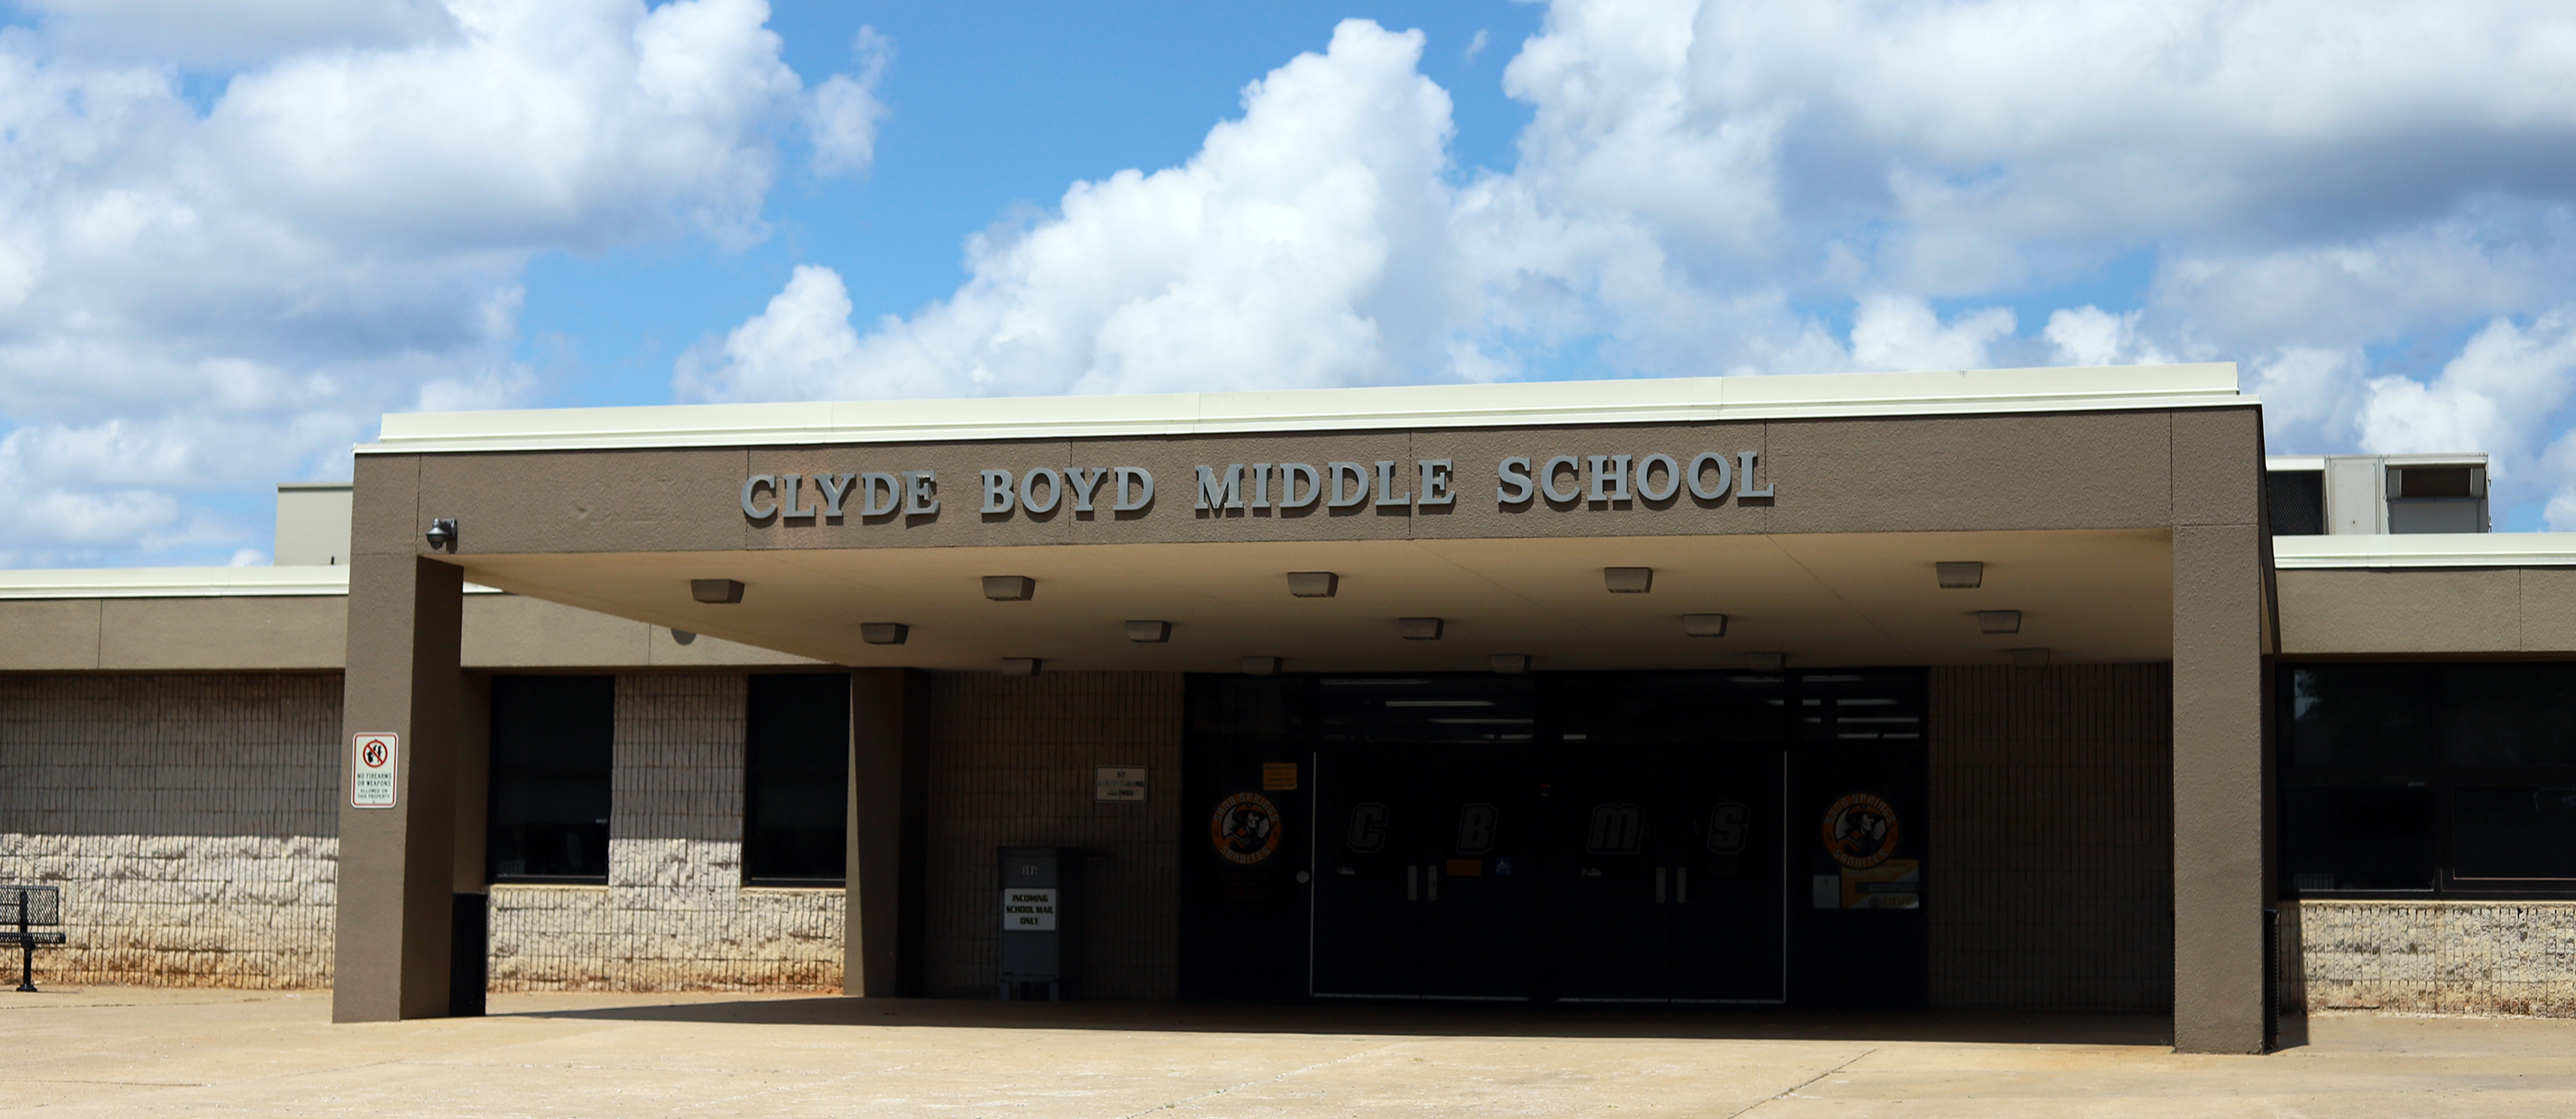 Clyde Boyd Middle School